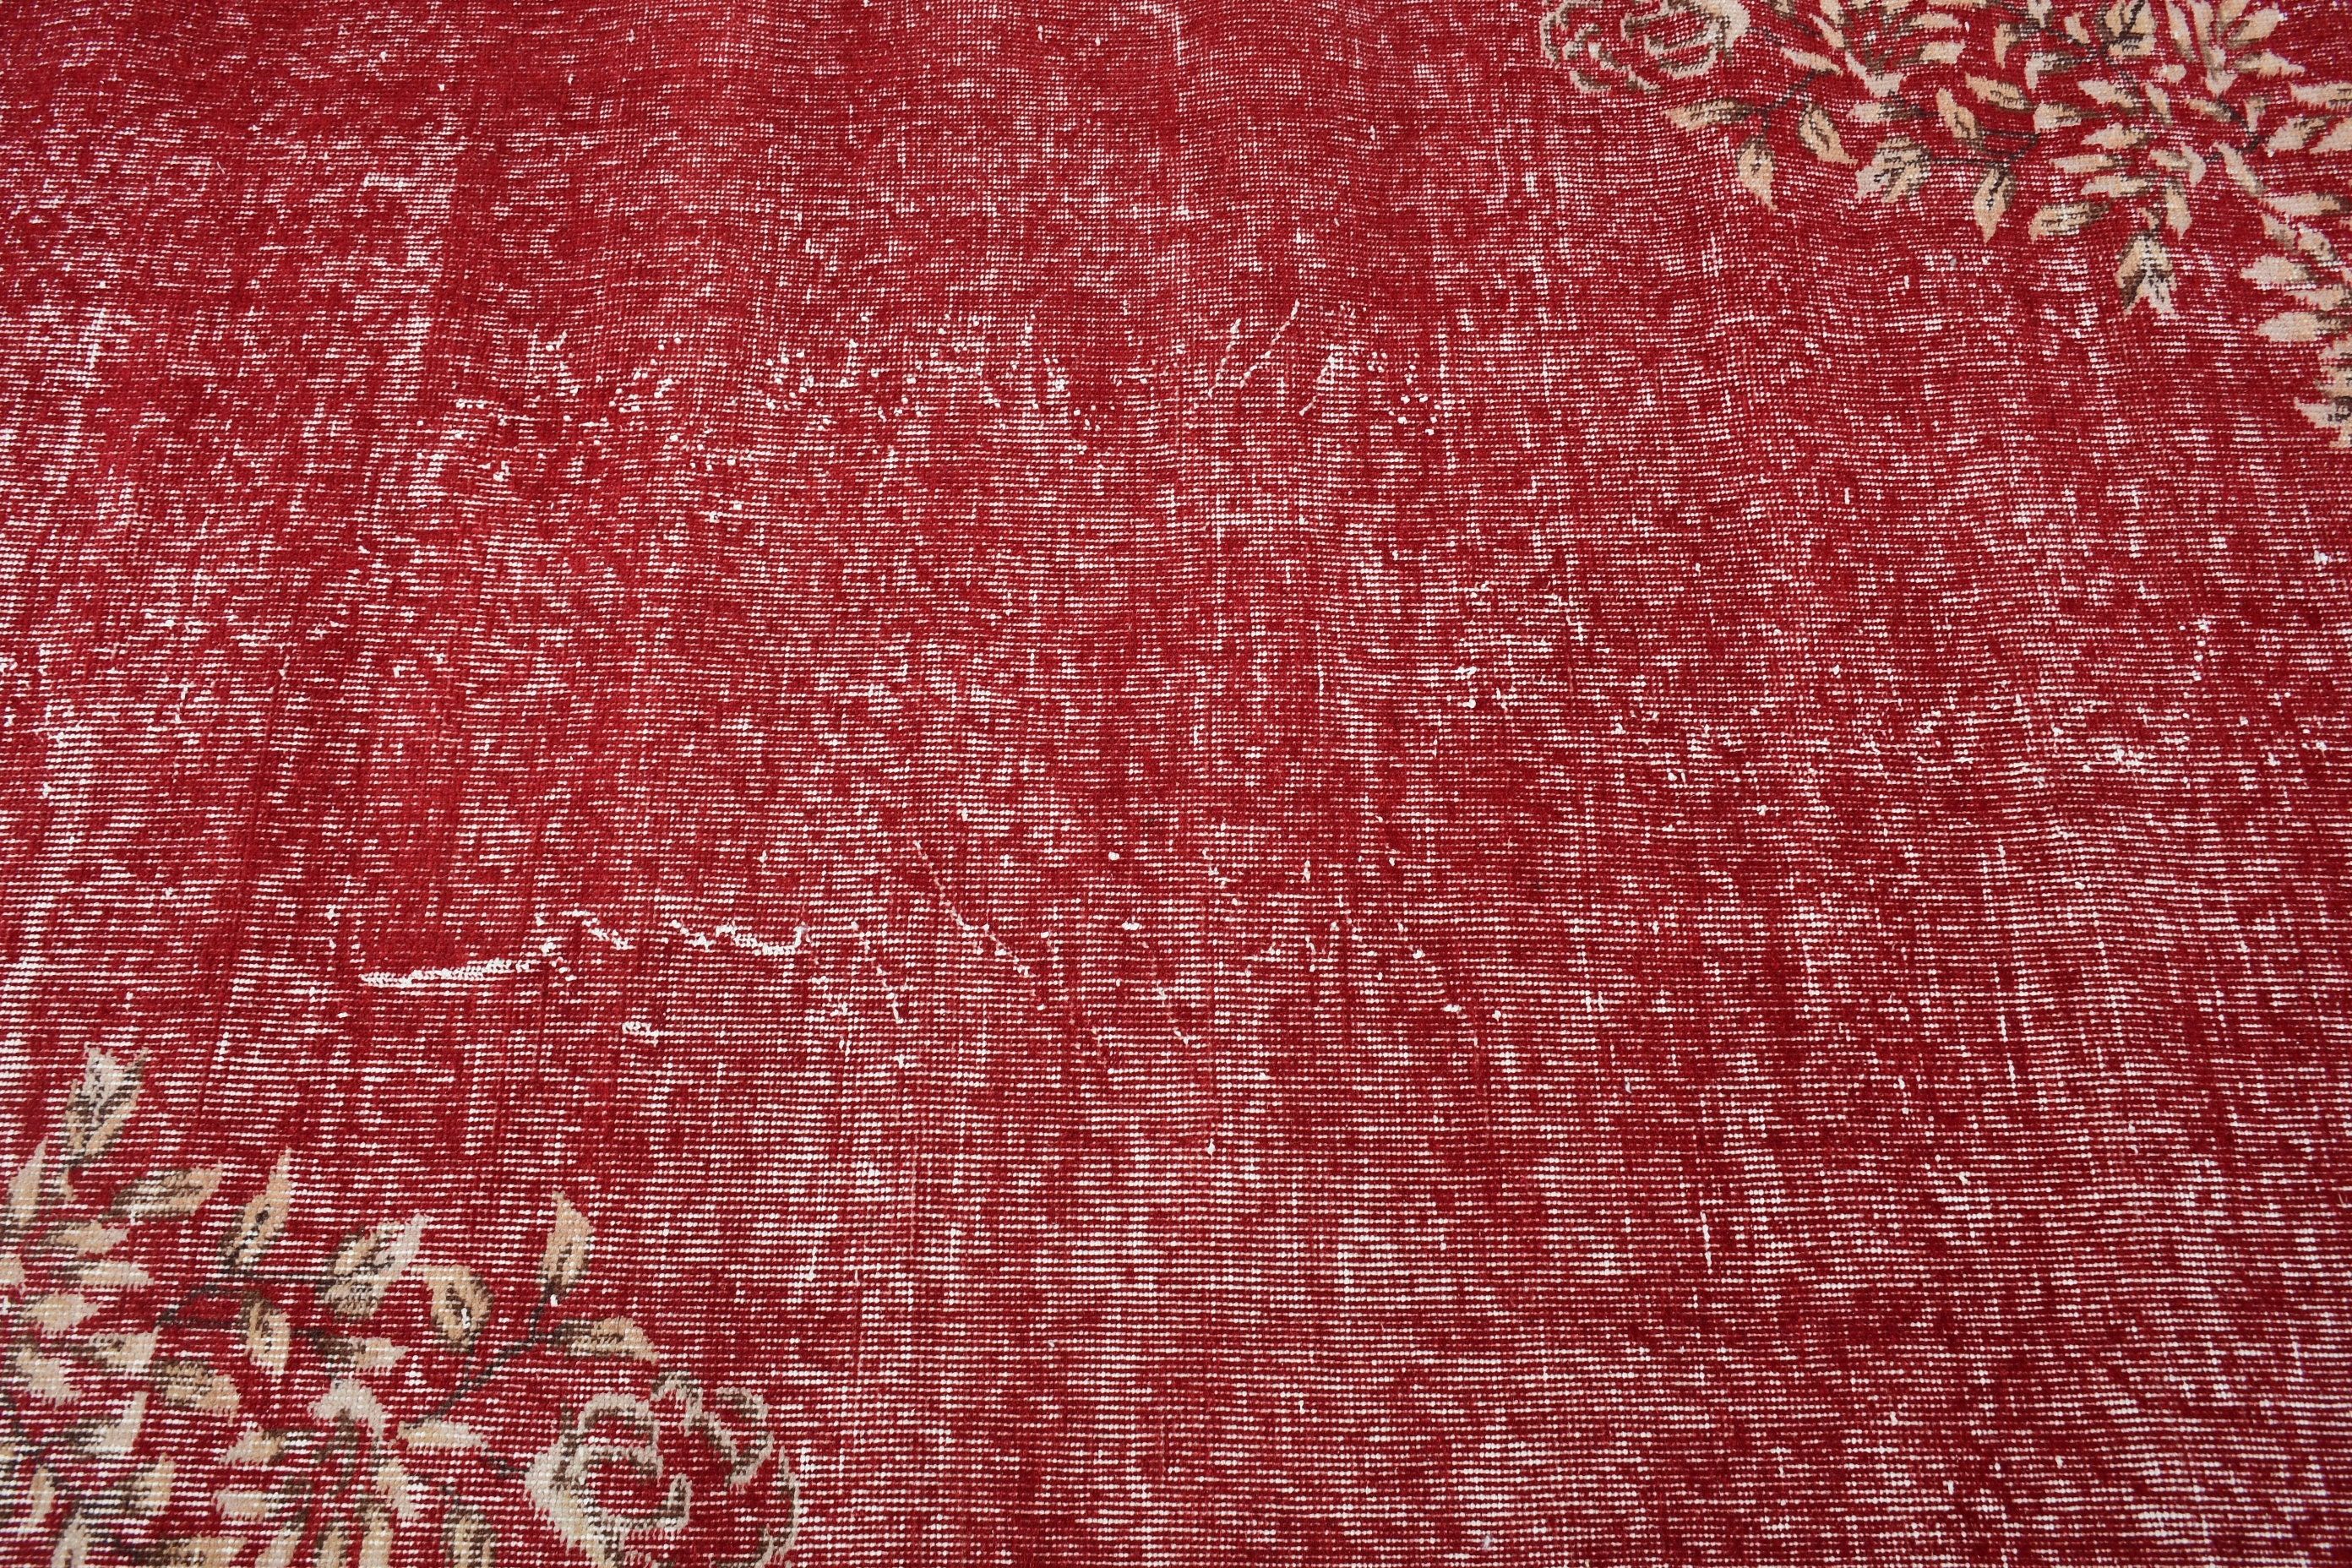 Red Moroccan Rug, Entry Rug, Rugs for Bedroom, Turkish Rug, Anatolian Rugs, 3.6x6.4 ft Accent Rug, Floor Rug, Vintage Rug, Bedroom Rug